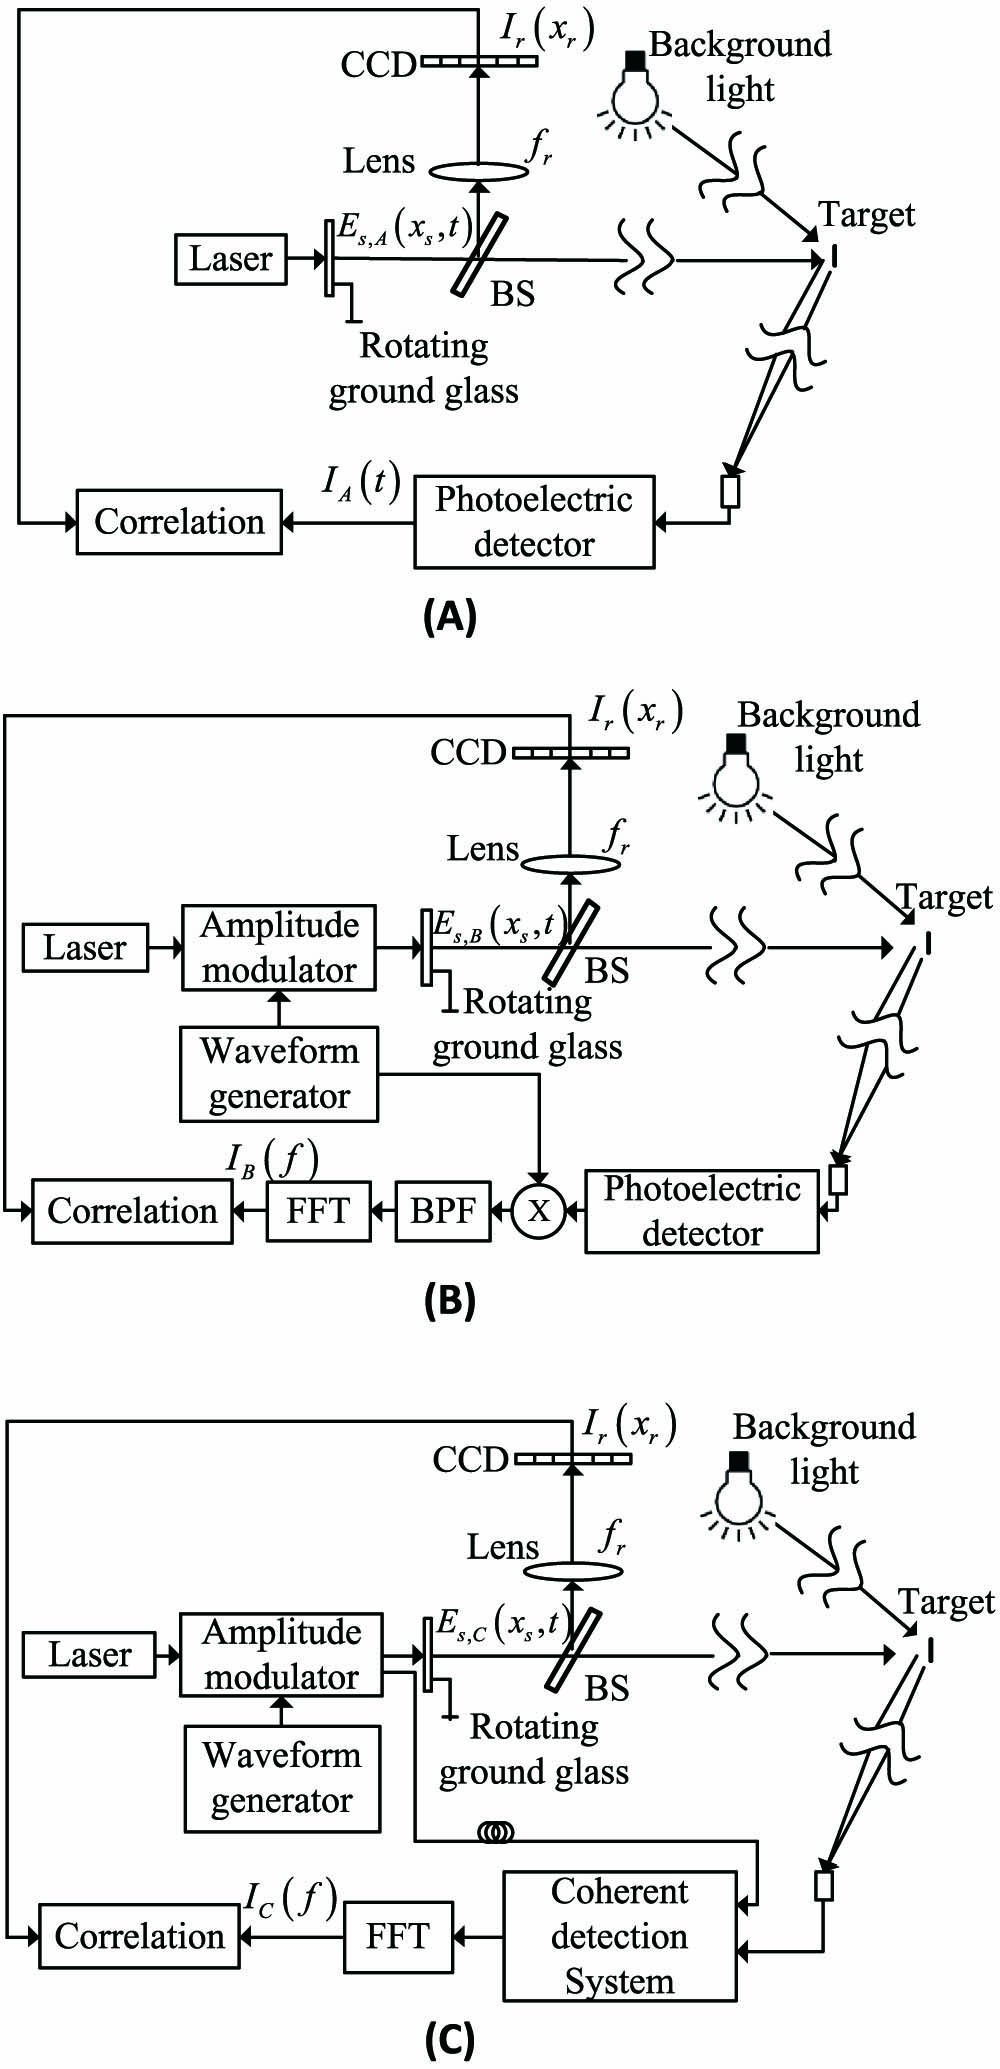 Schematic of GI lidar via different detection mechanisms: (A) narrow pulsed GI lidar, (B) heterodyne GI lidar, and (C) pulse-compression GI lidar via coherent detection.